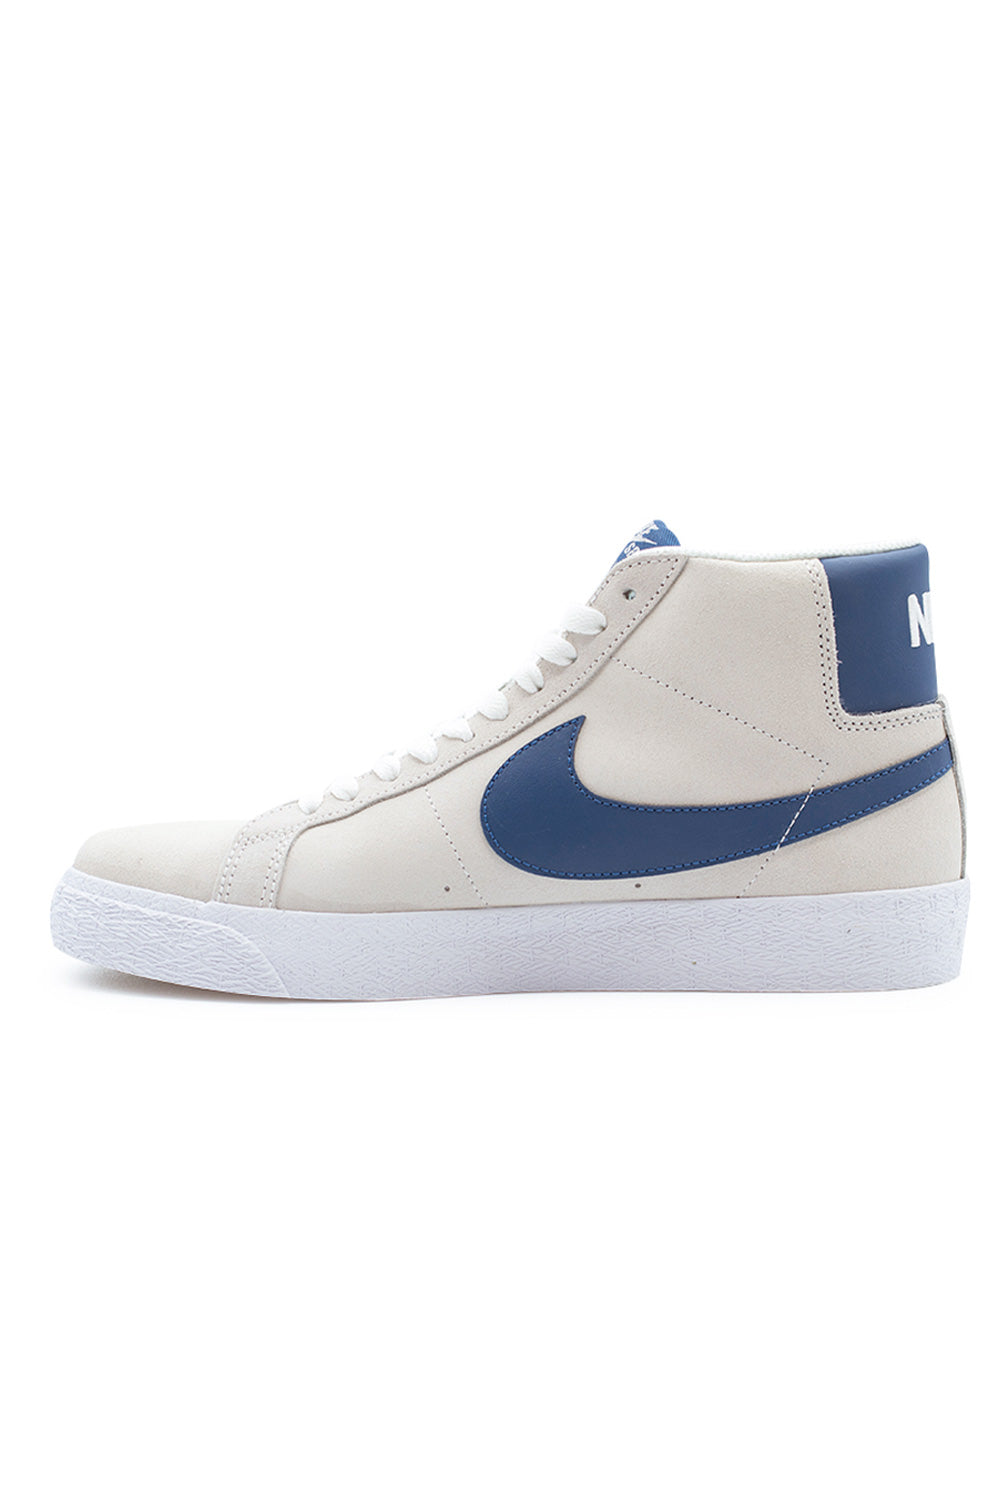 Nike SB Zoom Blazer Mid Shoe White / Court Blue / White / White - BONKERS